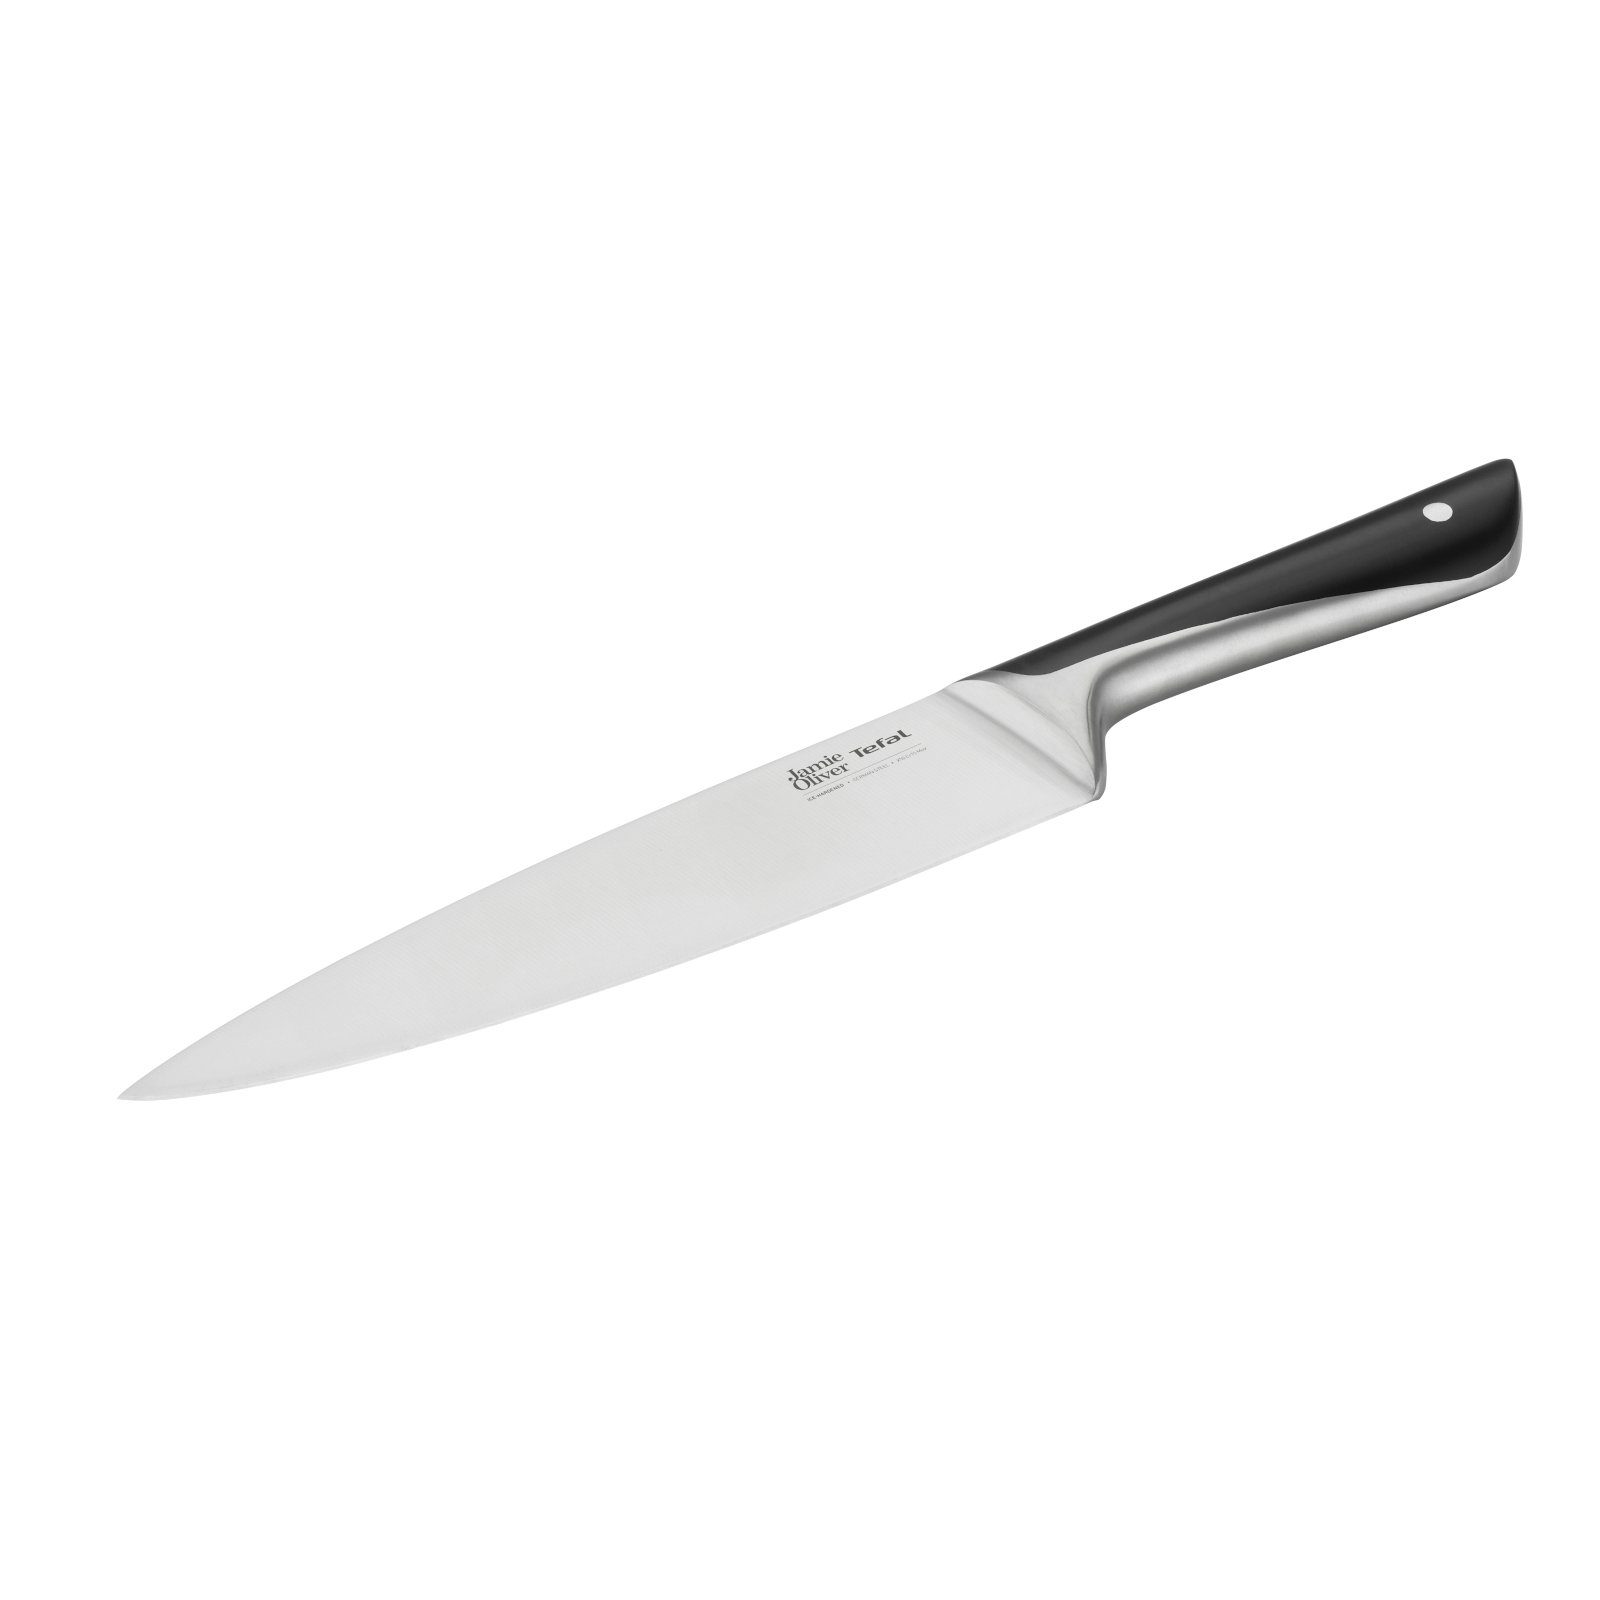 Tefal Kochmesser Jamie Oliver 20 cm Messer Chefs Knife Einhandmesser Kochmesser